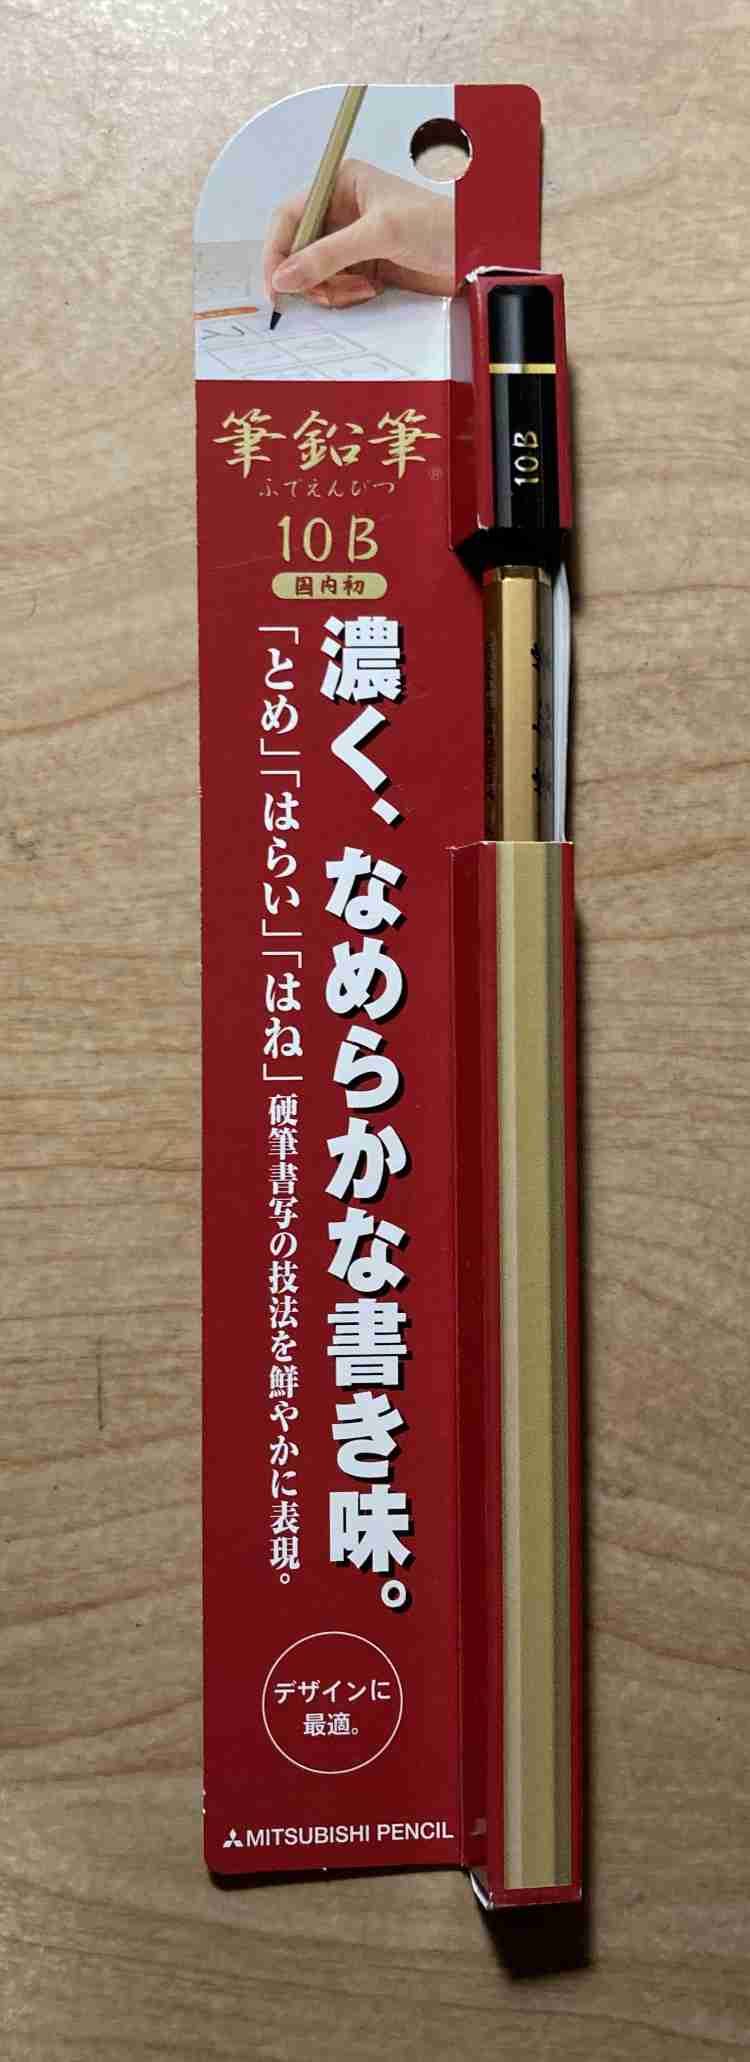 Mitsubishi Kohitsu Shosha Pencil 10B Package Frontside